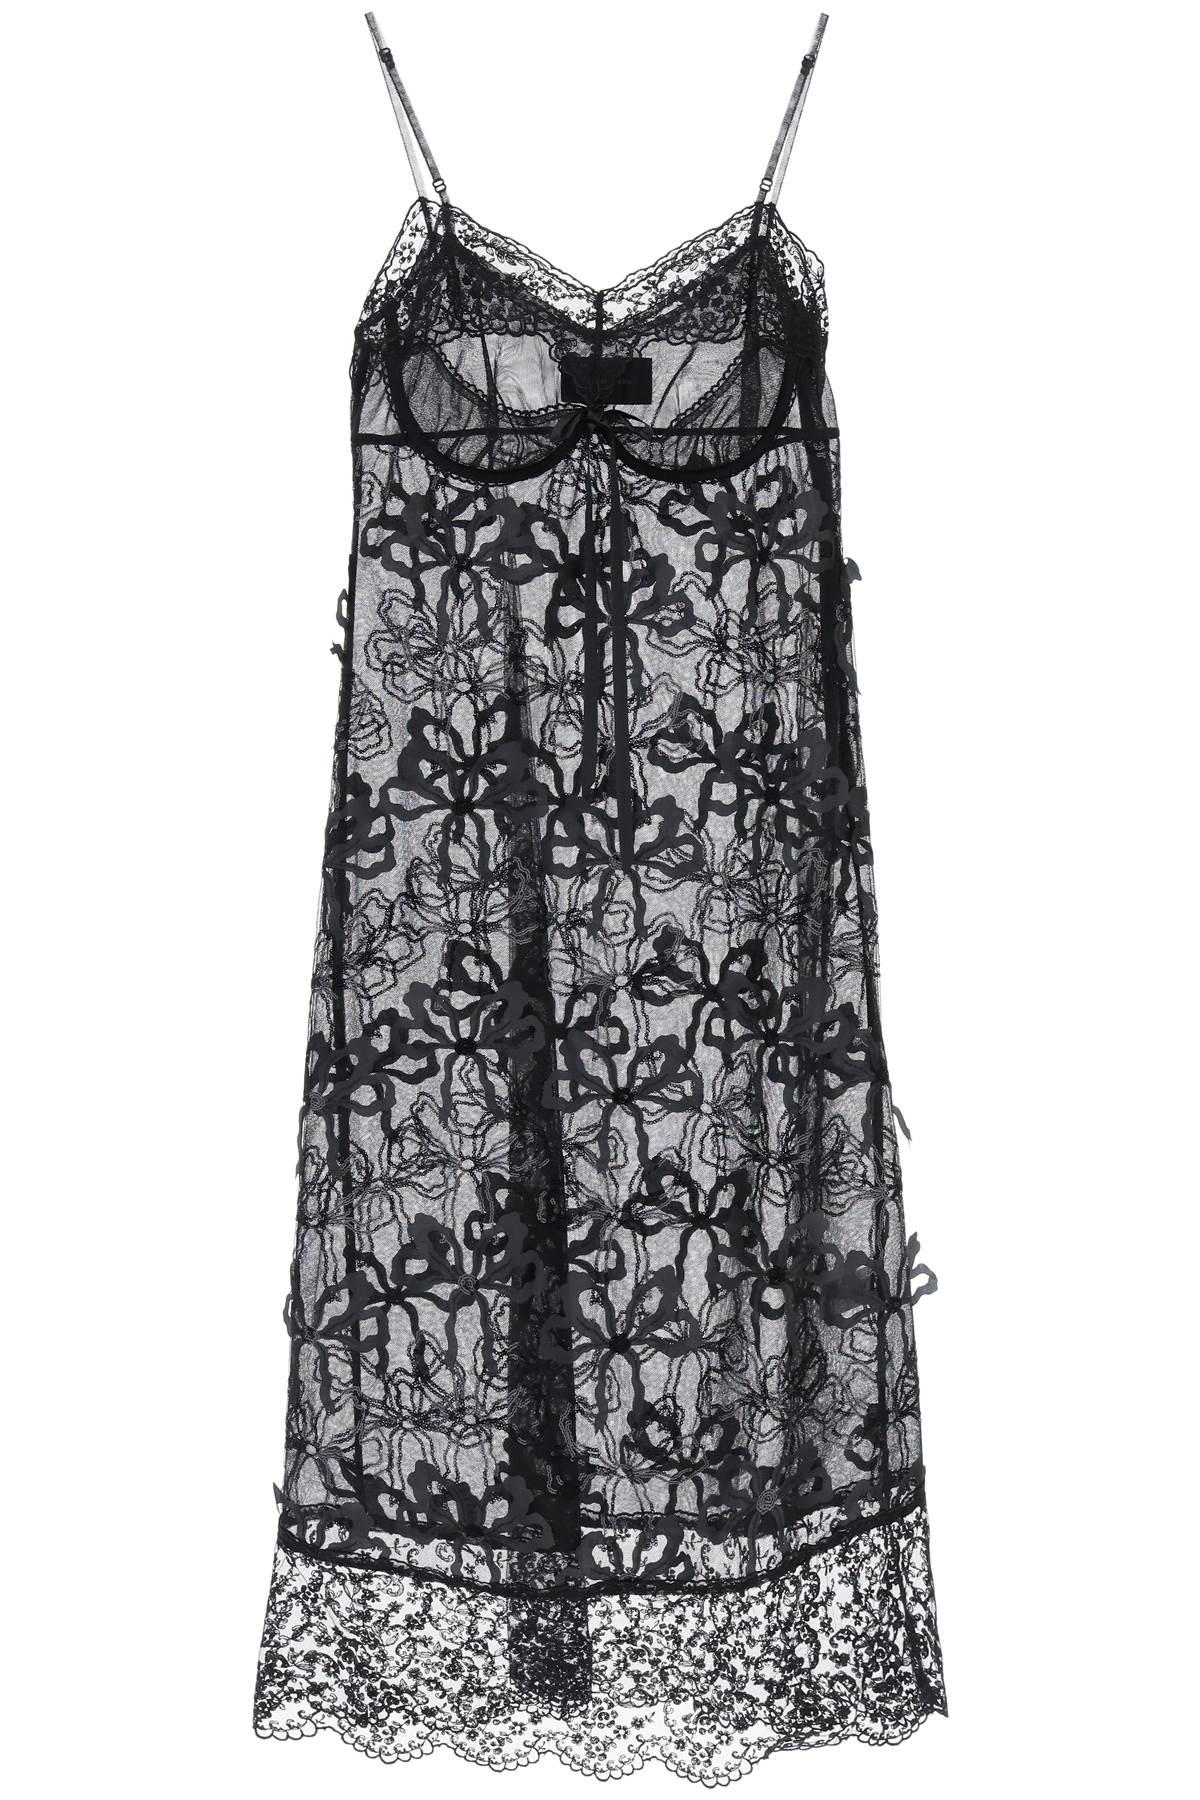 SIMONE ROCHA Romantic & Sensual Embroidered Tulle Slip Dress for Women